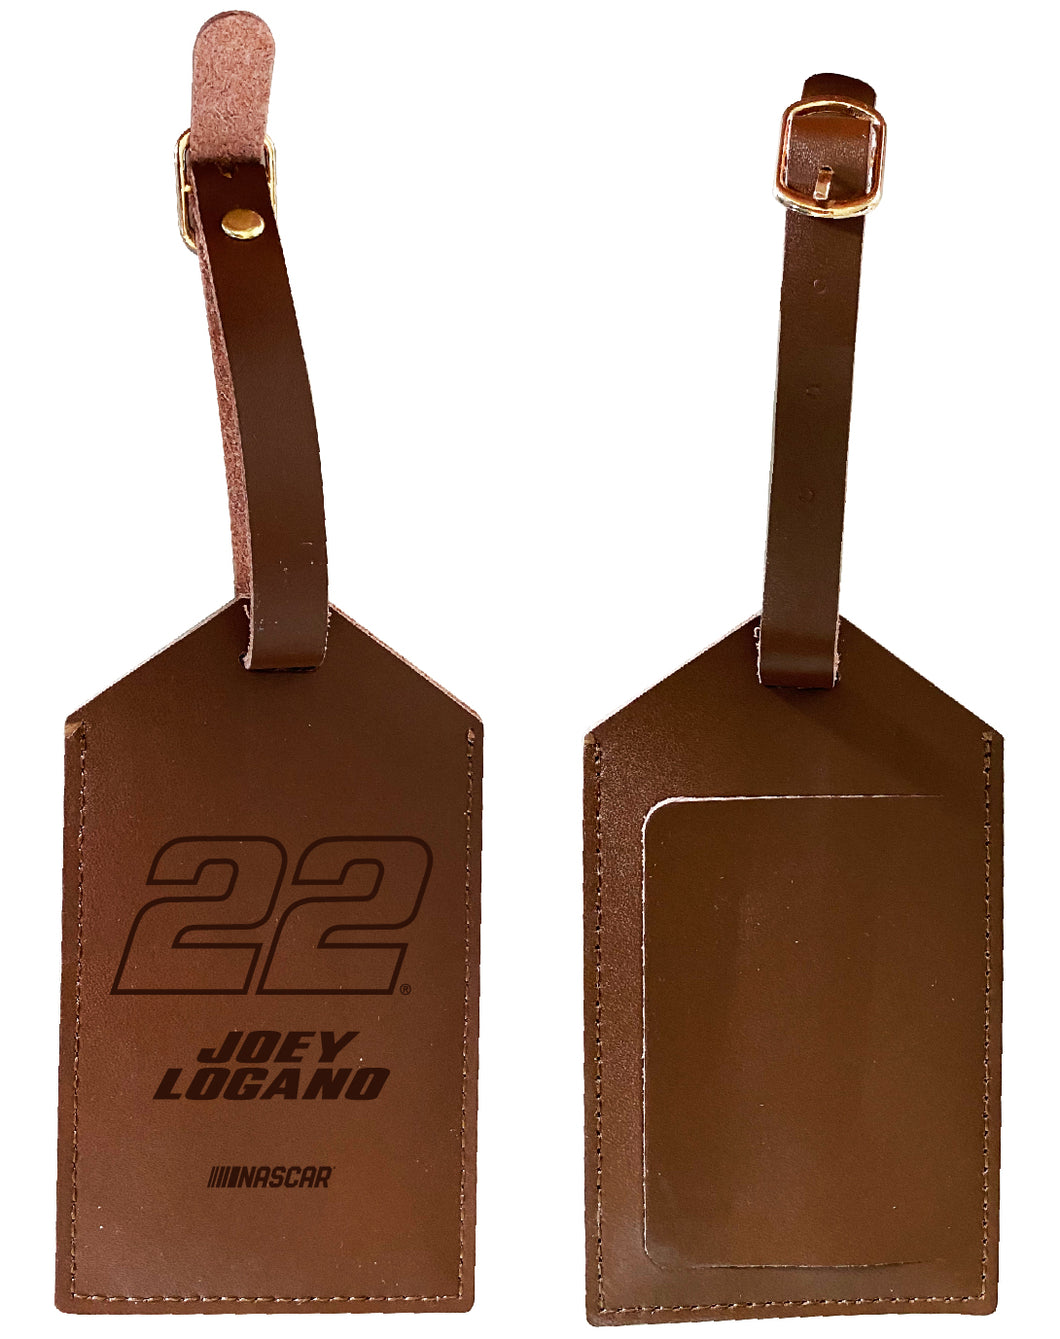 Nascar #22 Joey Logano Leather Luggage Tag Engraved